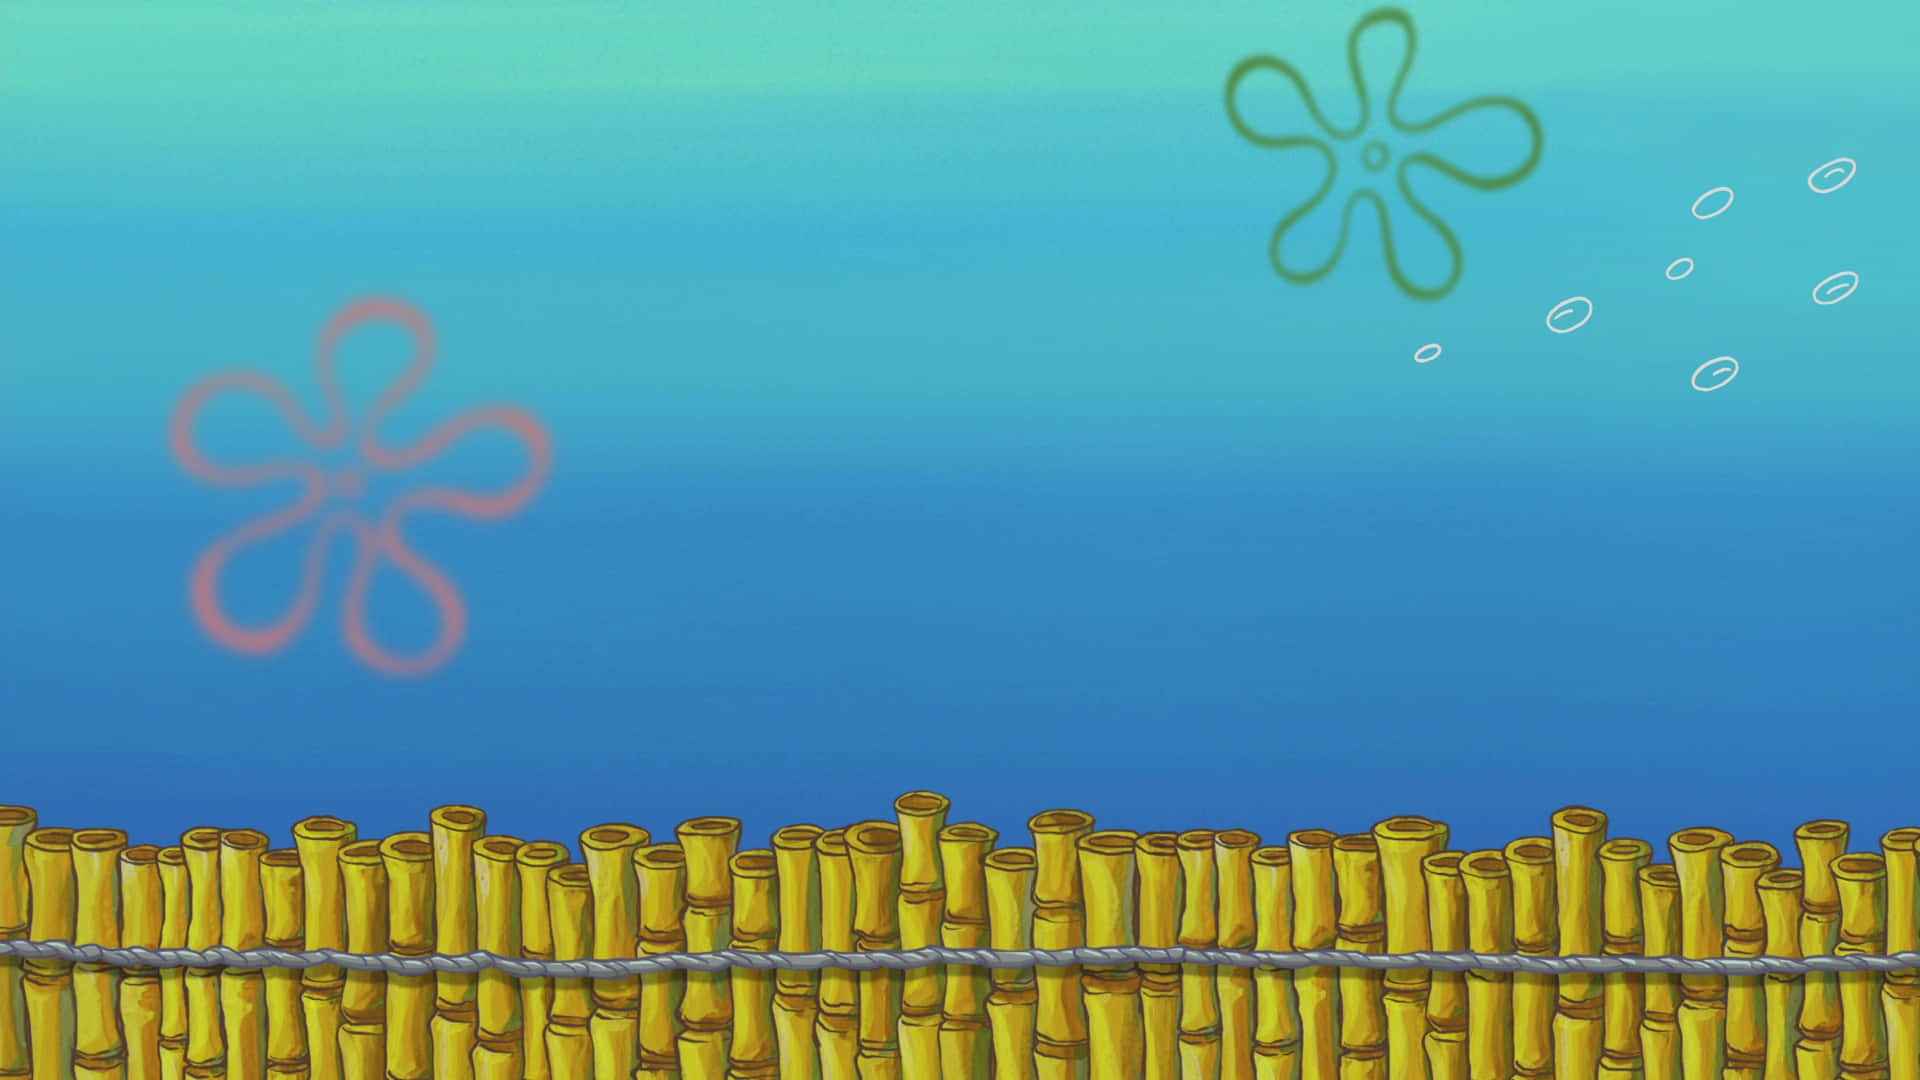 Zoom into the world of Spongebob Squarepants